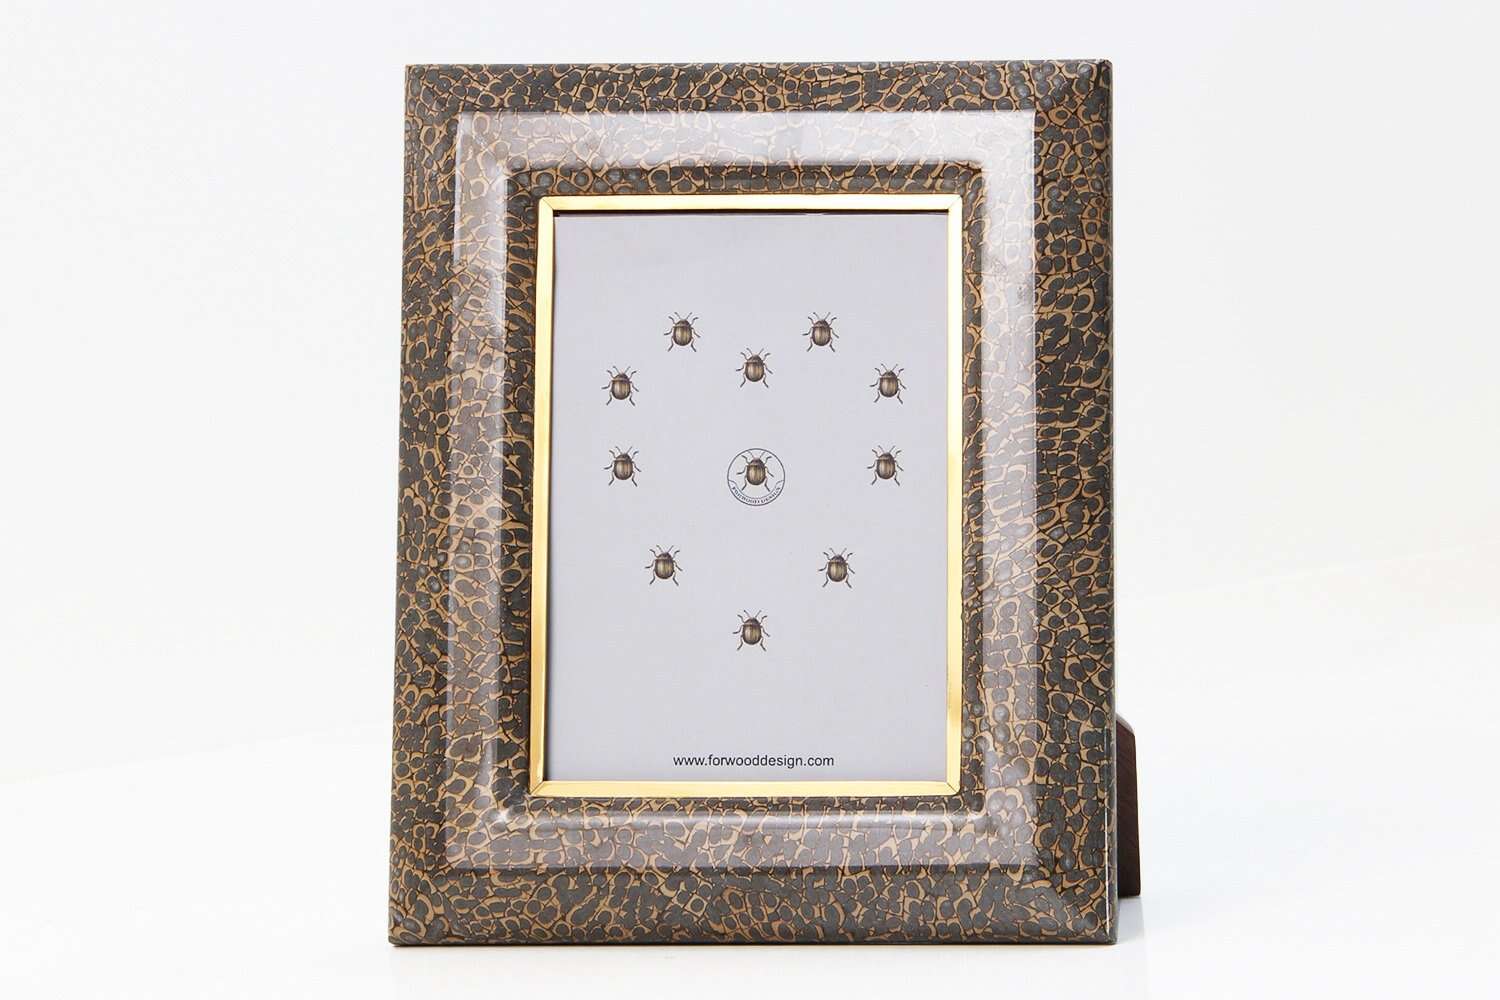 Unique Forwood Design eggshell photo frame Photo frames gift present